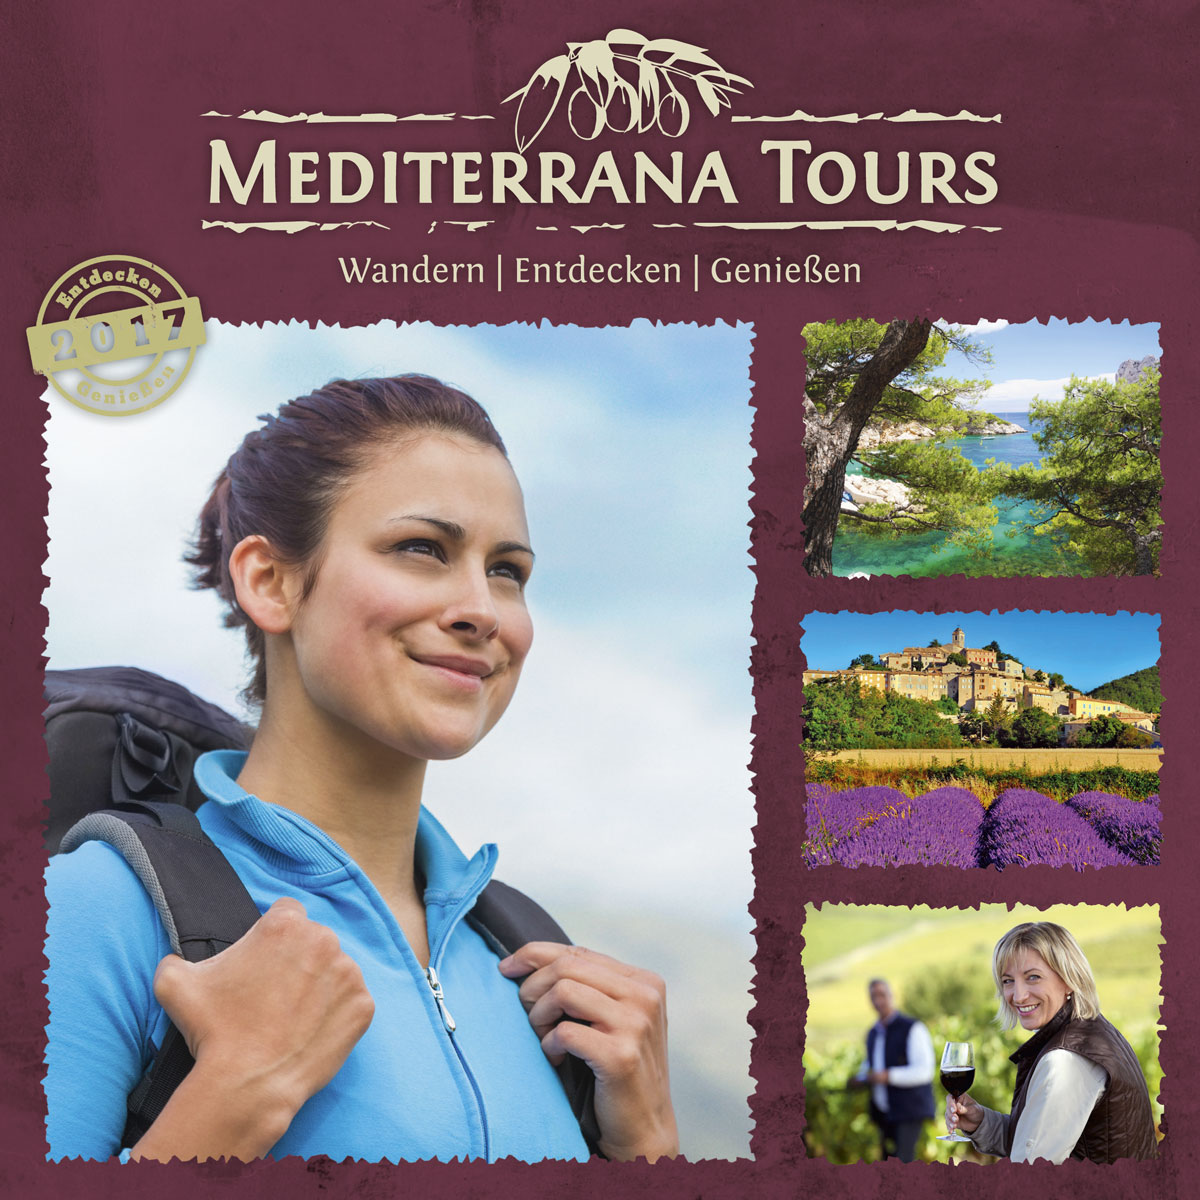 Mediterrana Tours Katalog 2017